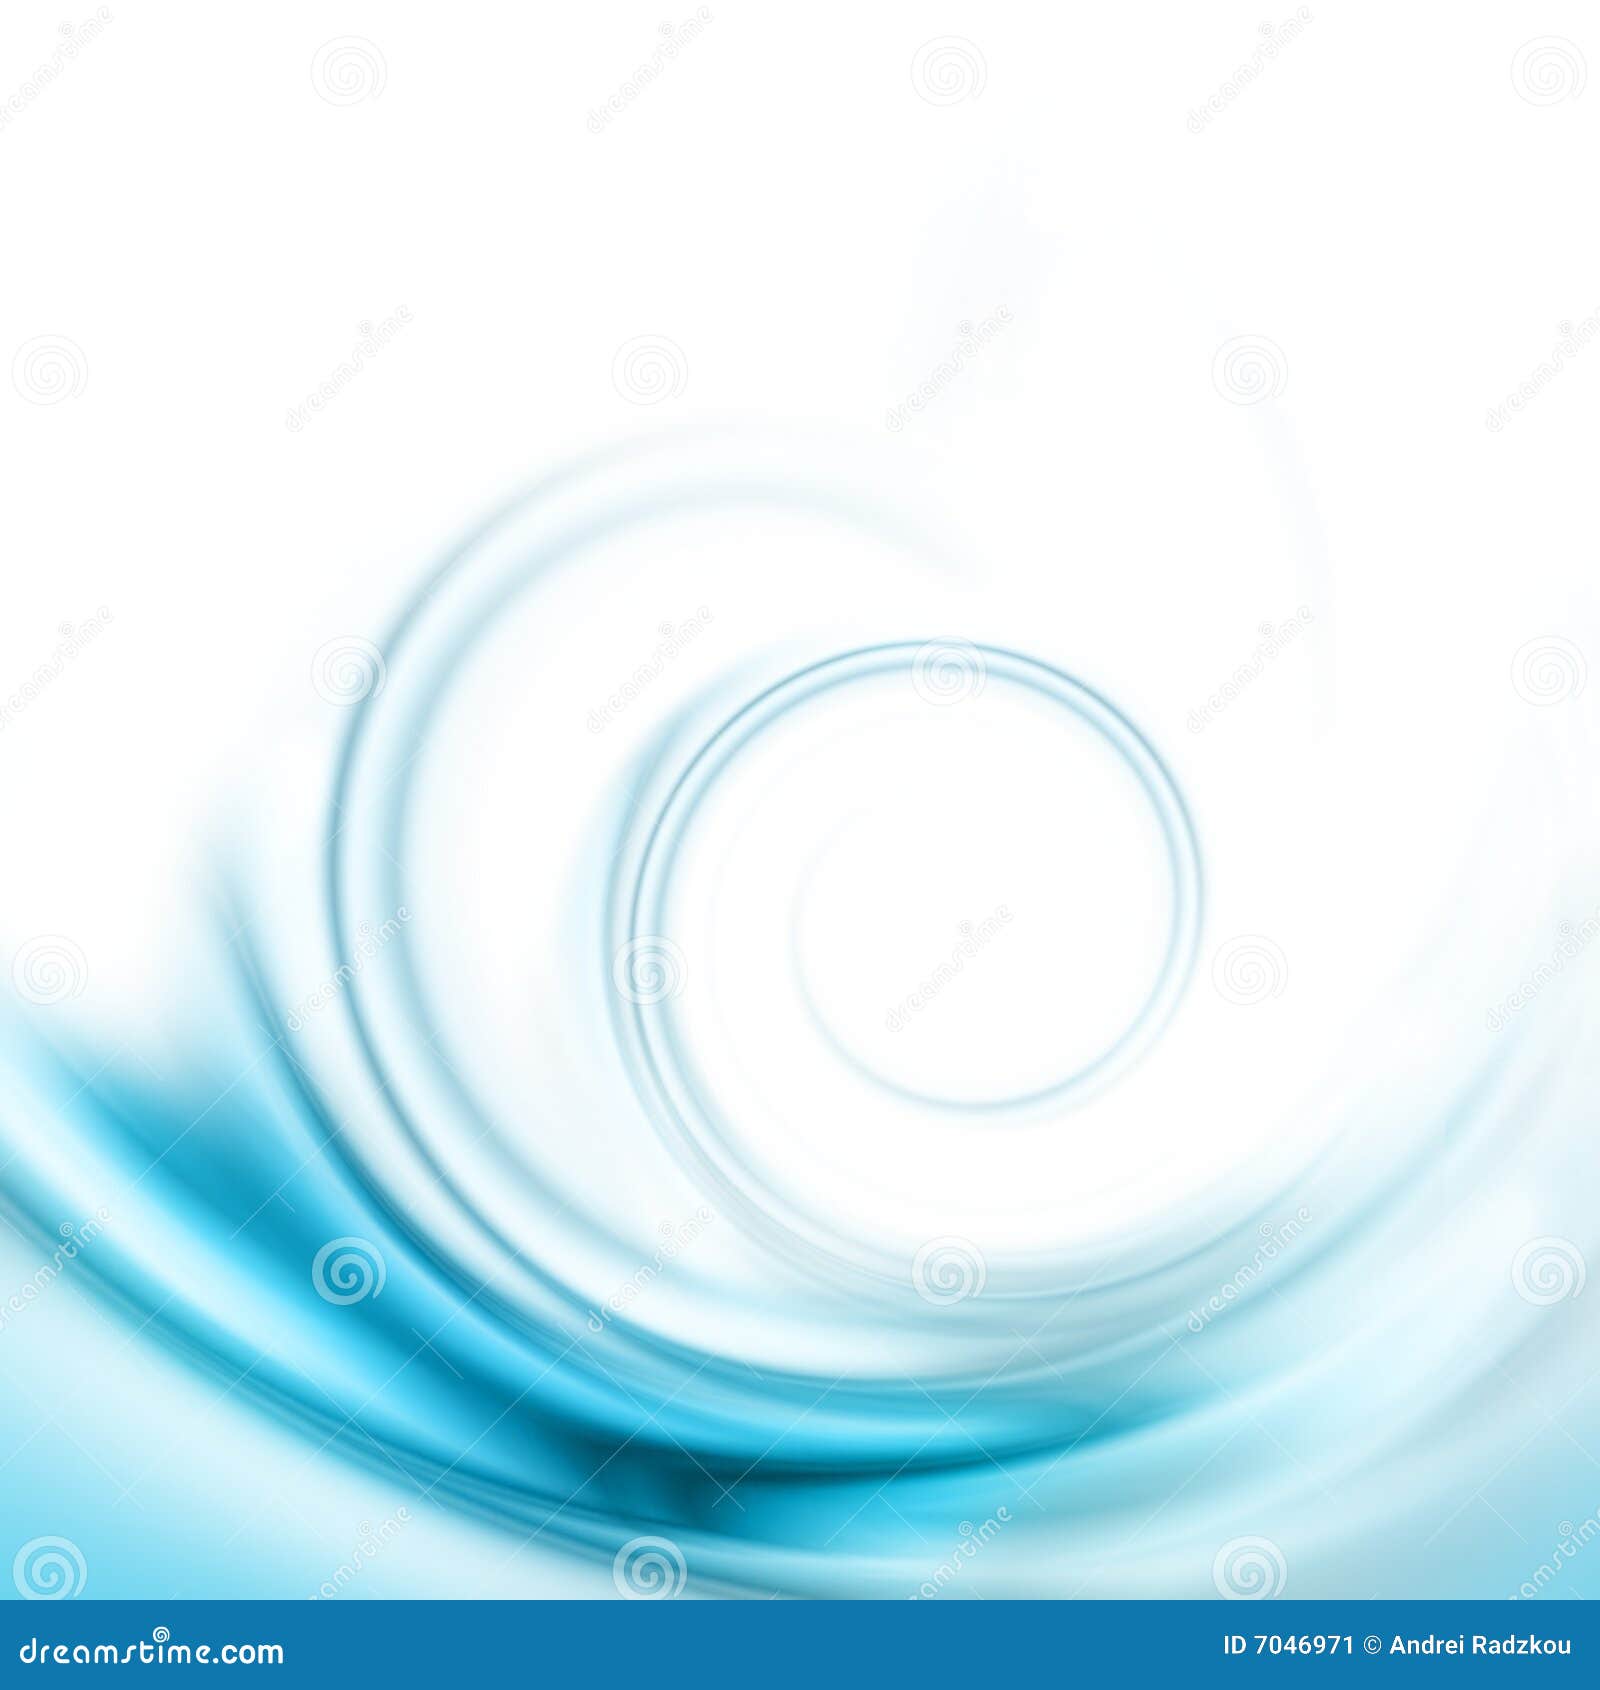 translucent blue swirl